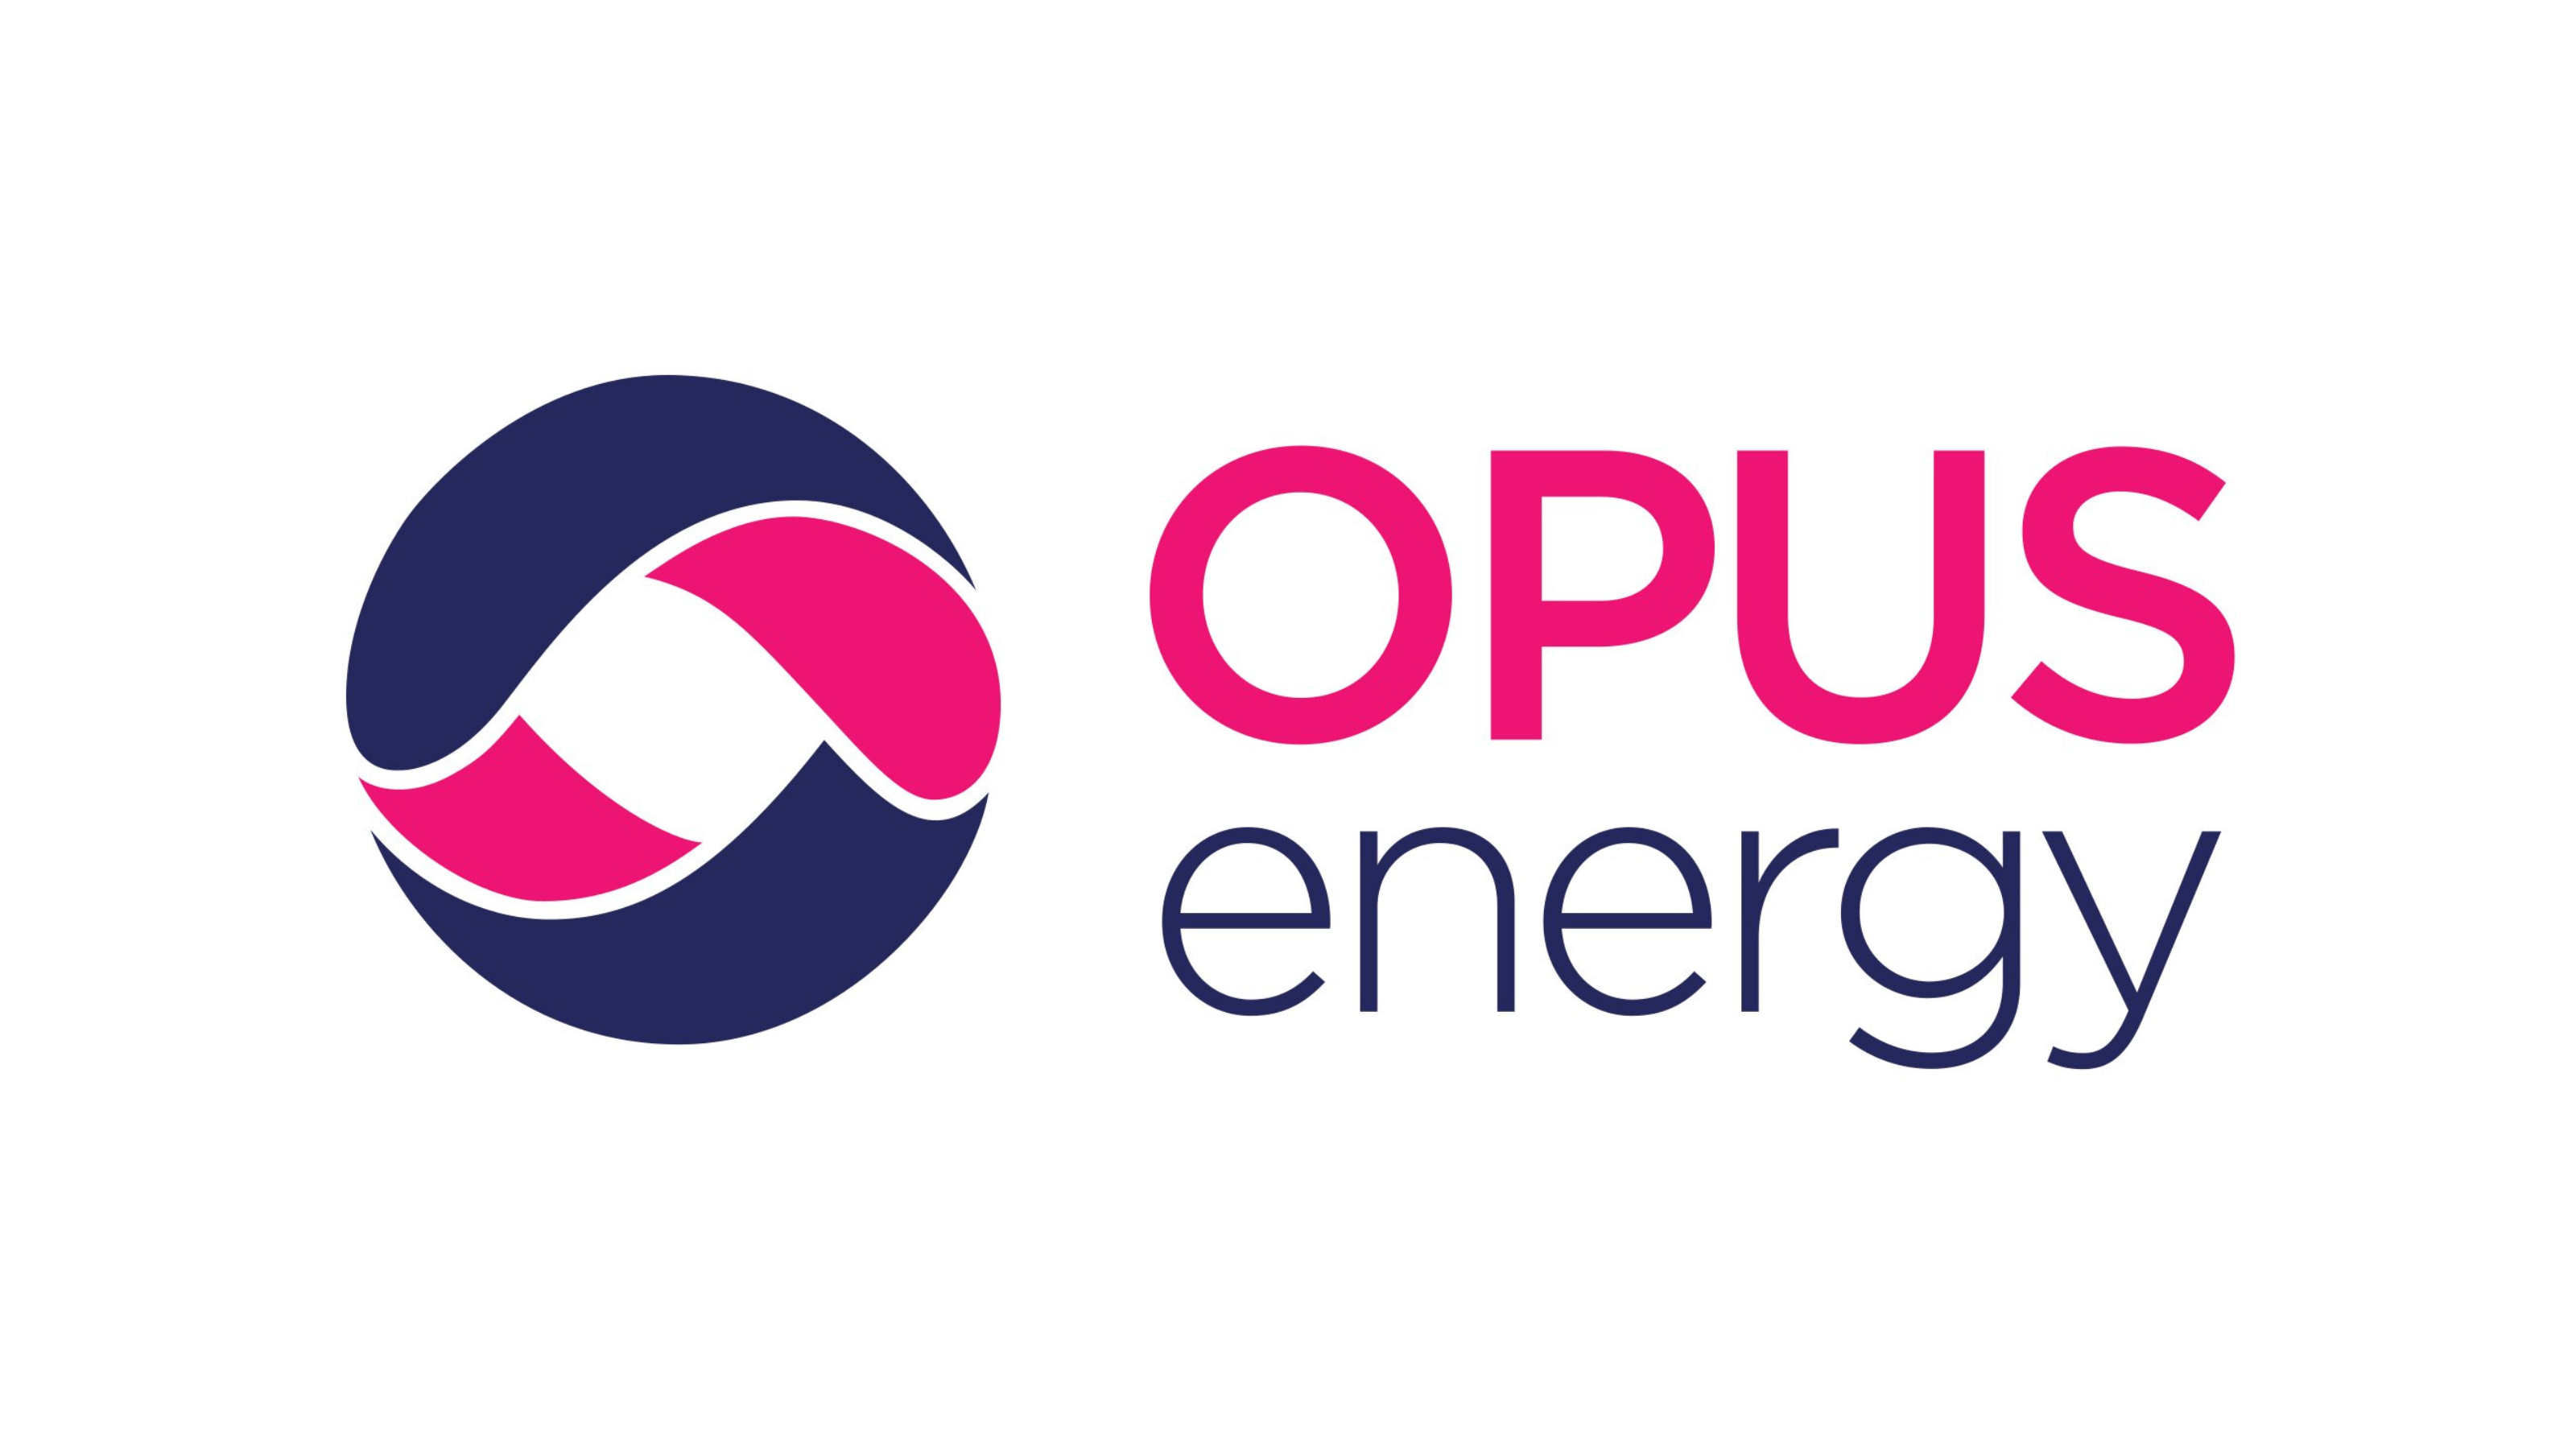 Opus Energy logo